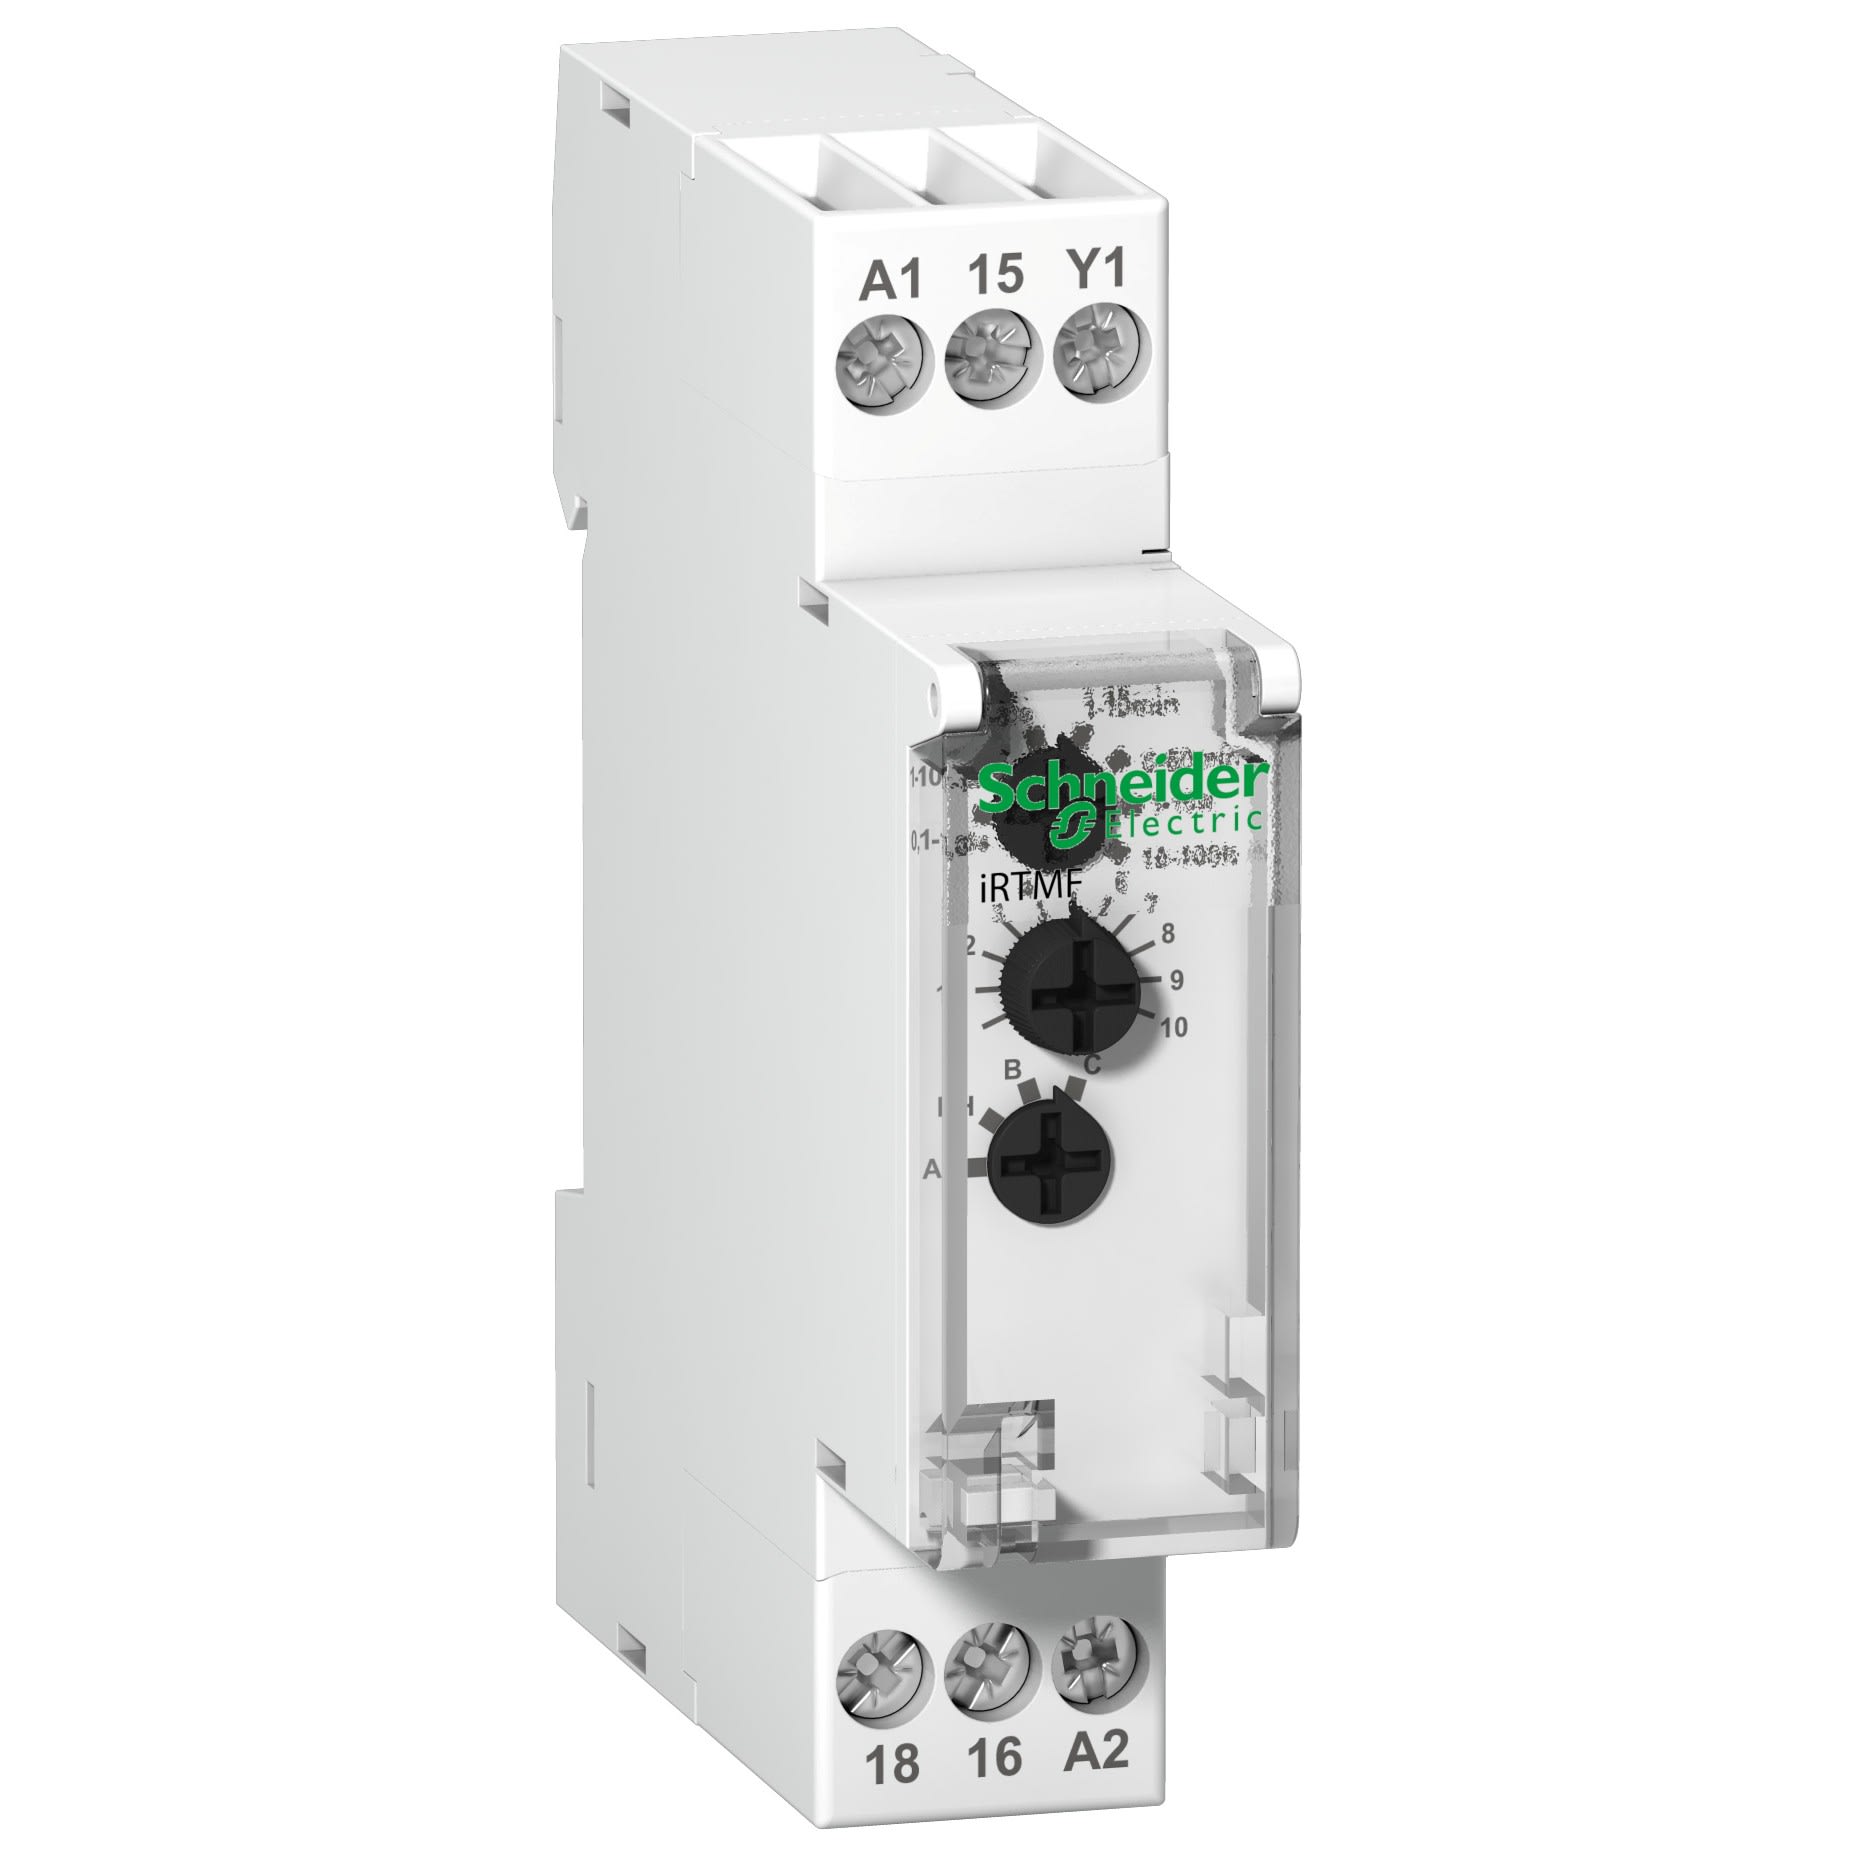 Schneider Electric - Acti9, RTMF, relais temporise multifonction 1OF 12...240VCA-CC